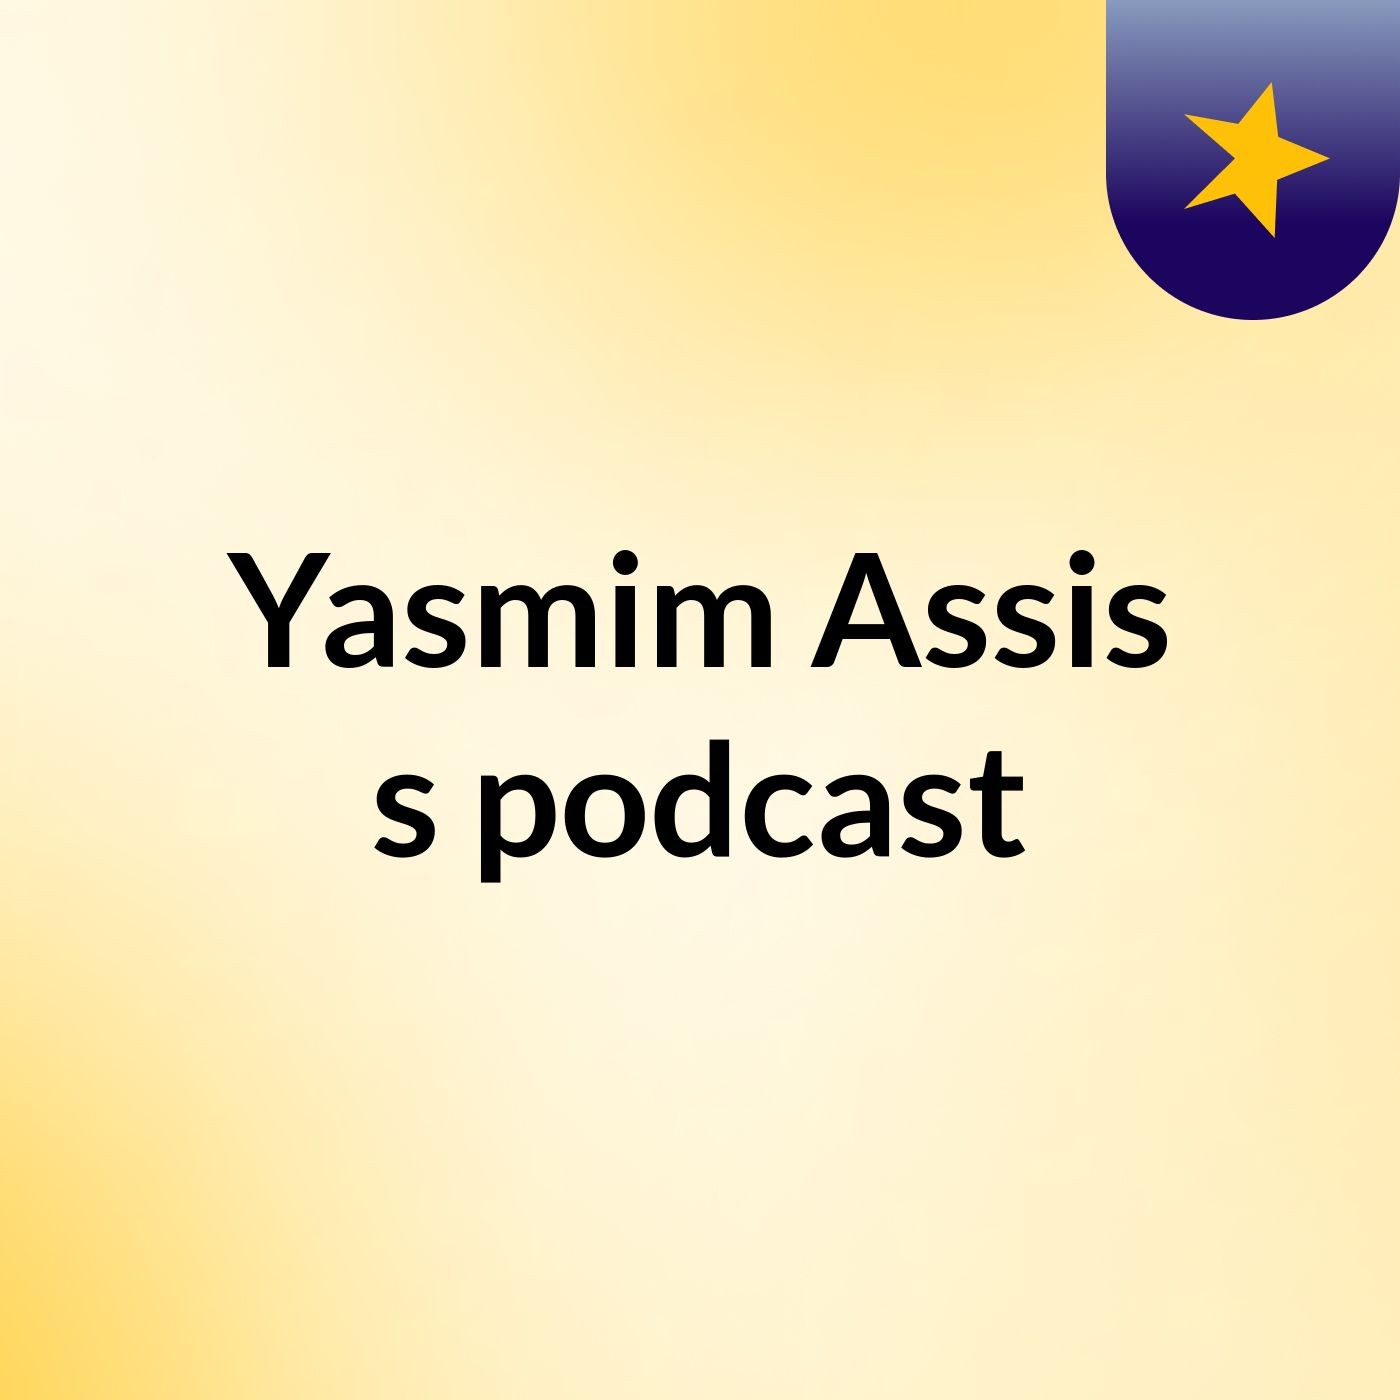 Yasmim Assis's podcast